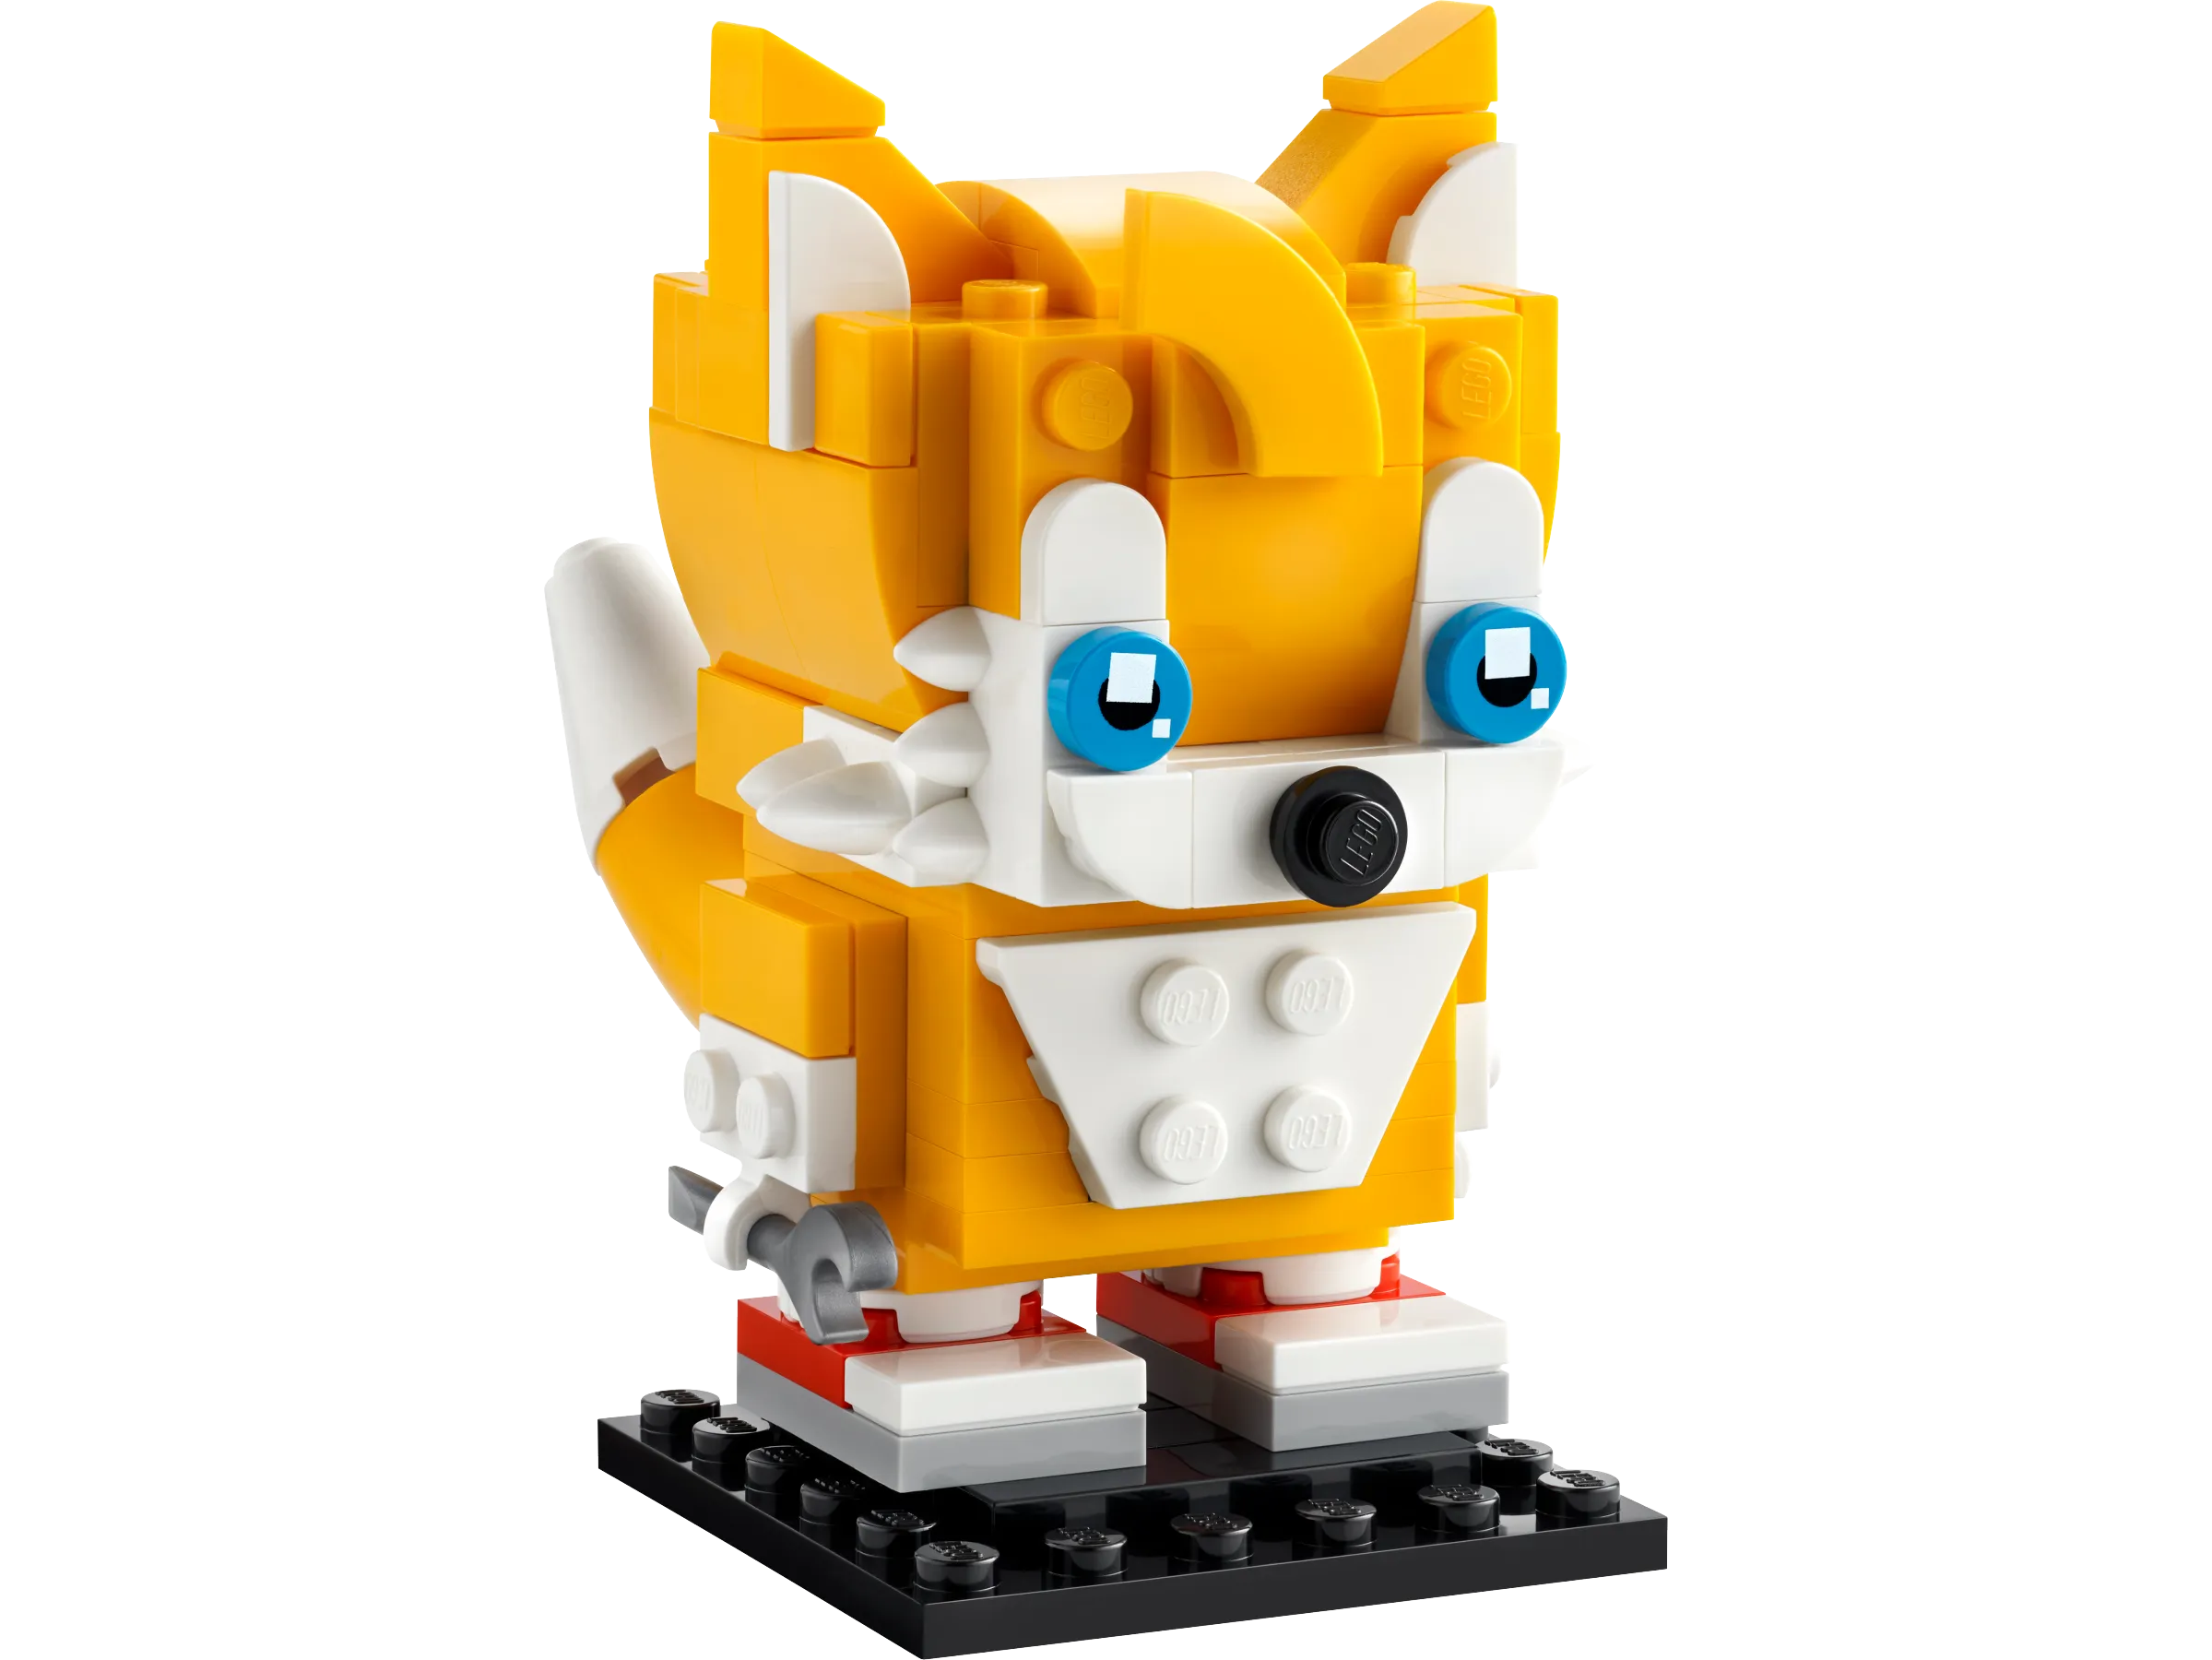 Sonic the Hedgehog™  Loja oficial LEGO® BR - Lego